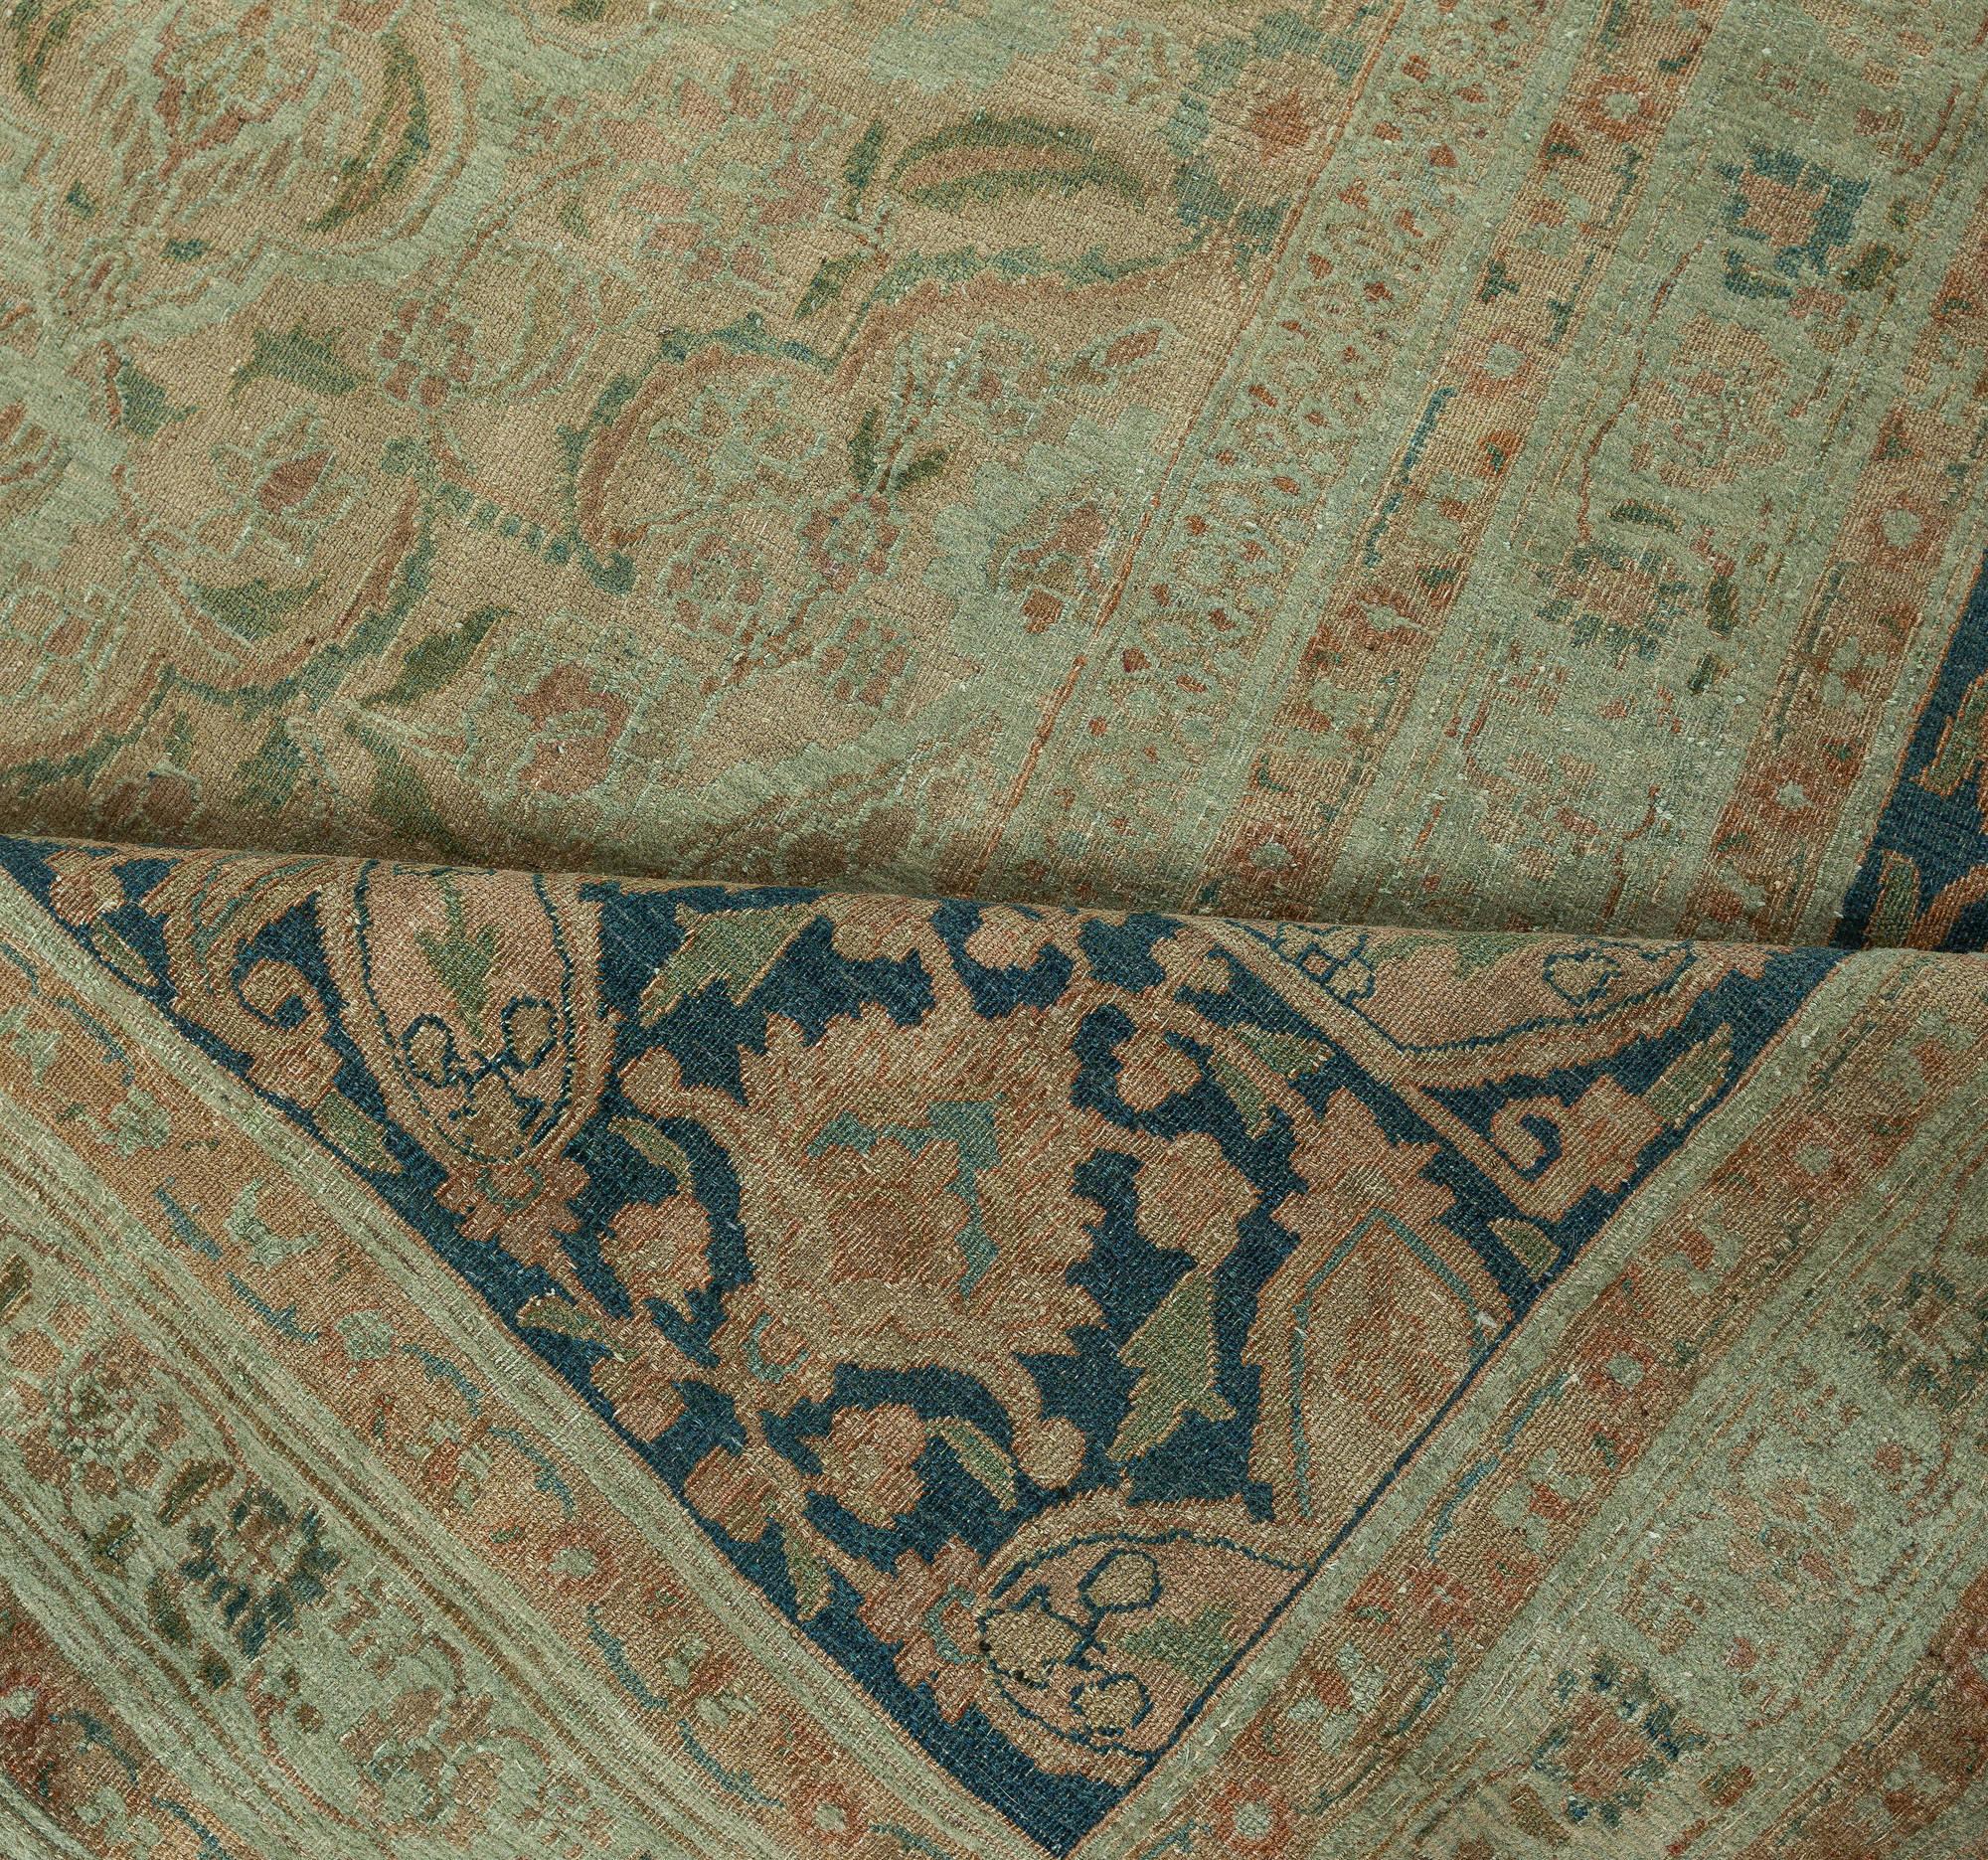 Authentic Persian Meshad botanic green handmade wool rug
Size: 12'10